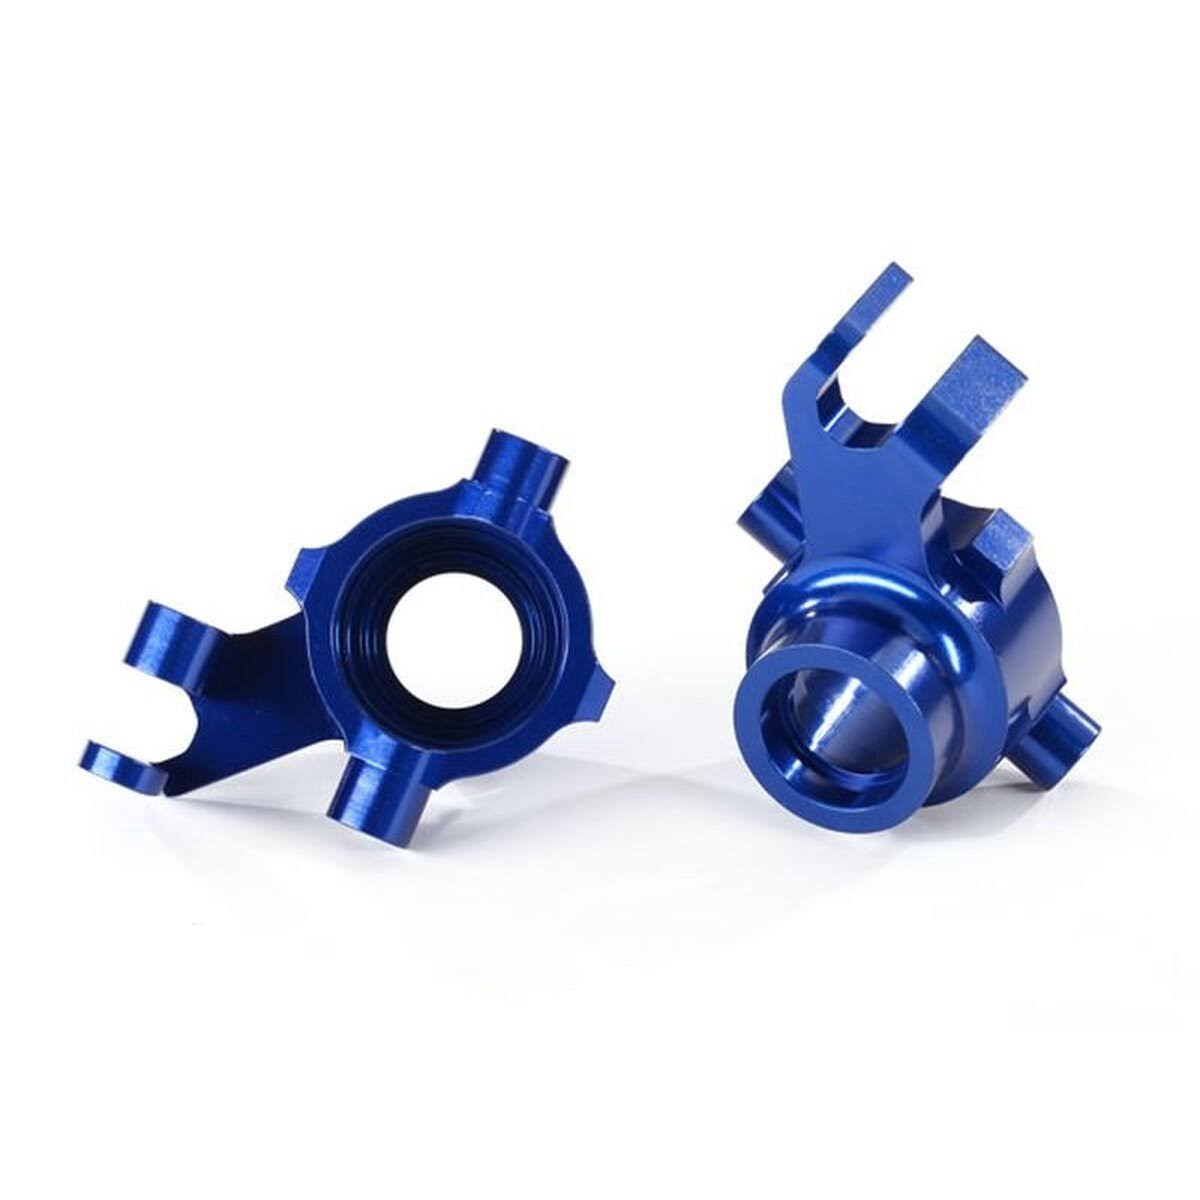 Traxxas Steering blocks, 6061-T6 aluminum (blue-anodized)